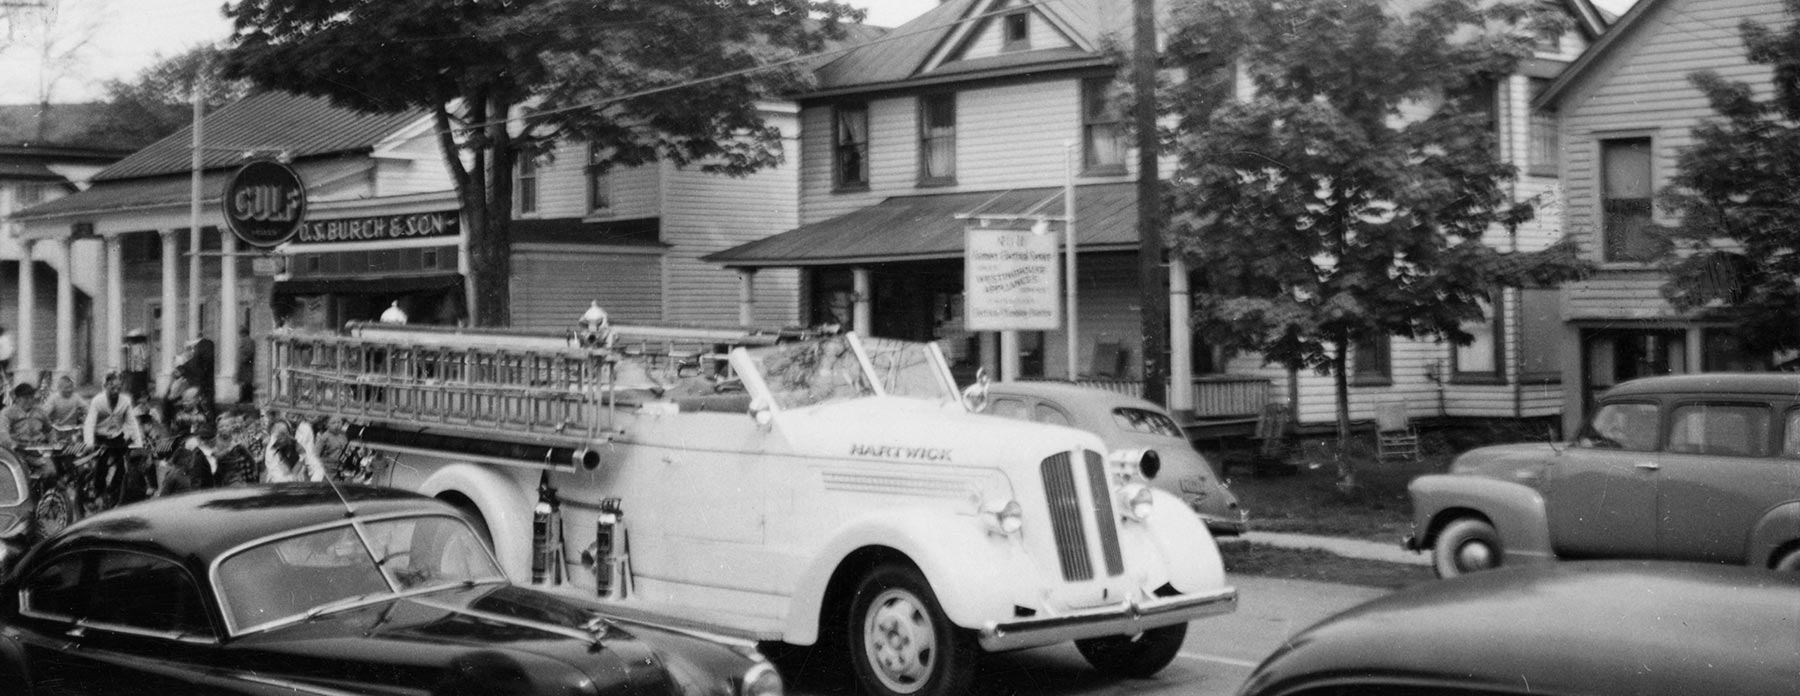 Historical photo of fire trucks on Main Street